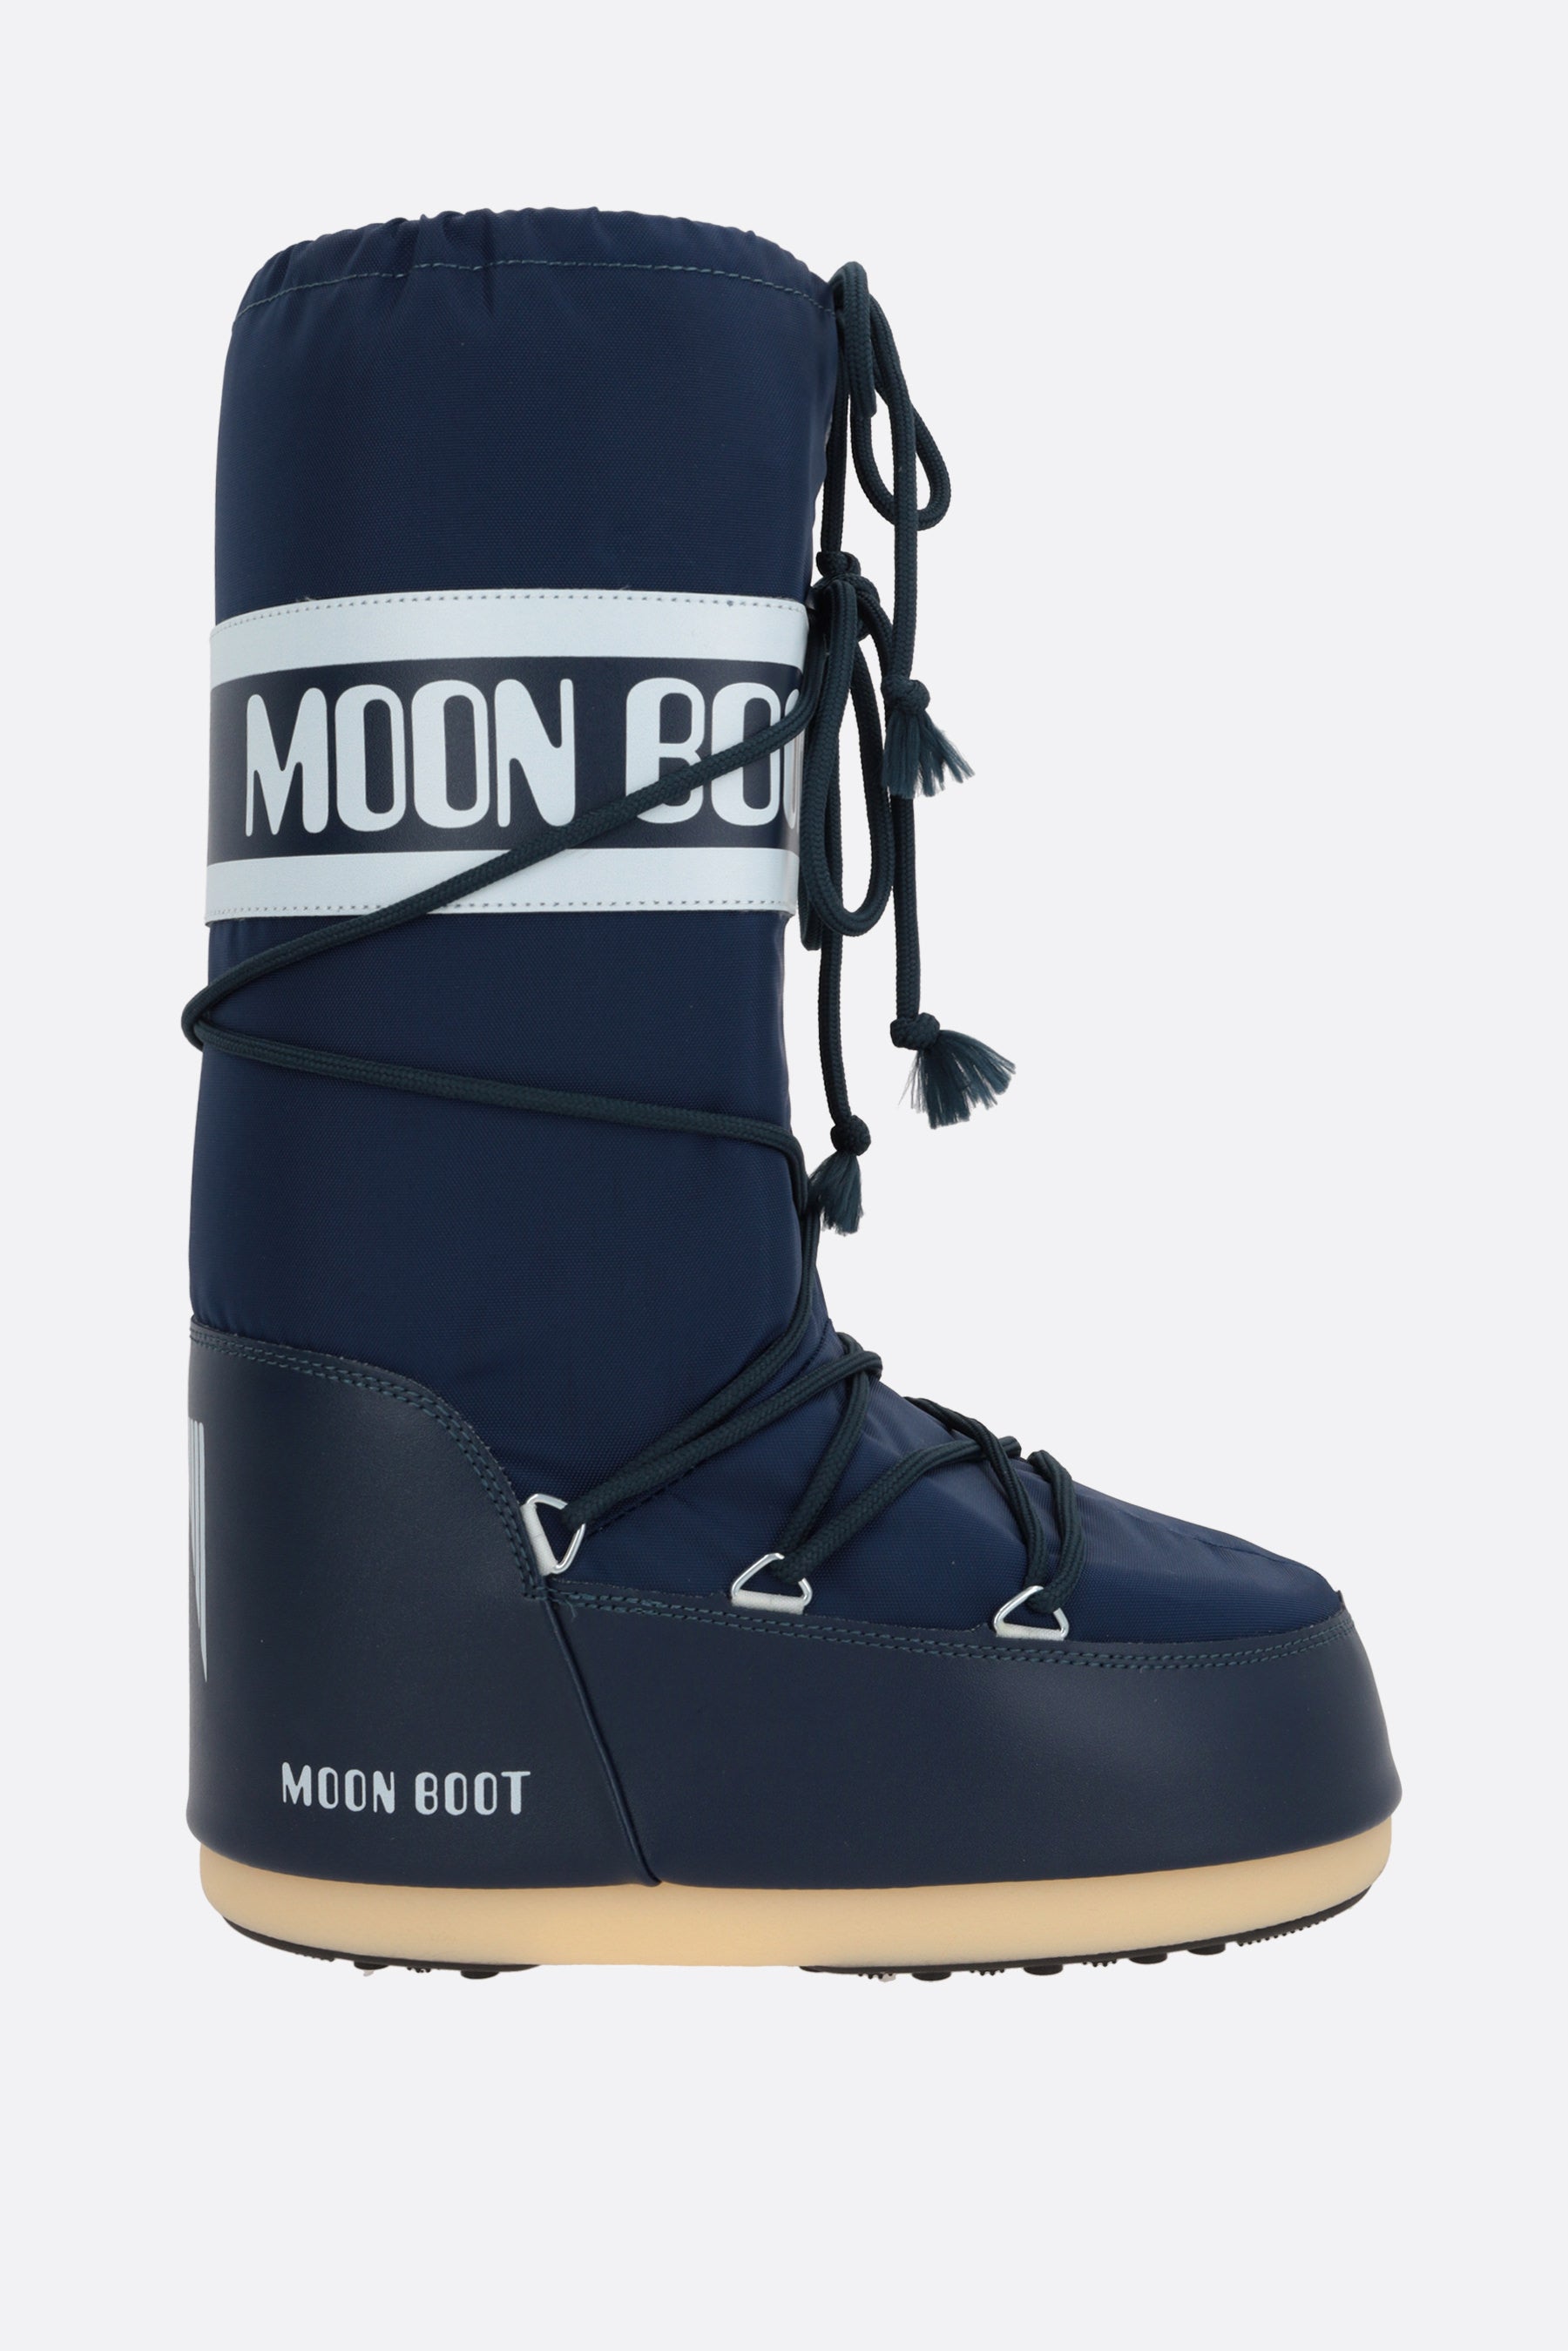 Moon Boot Icon nylon high-top snow boots